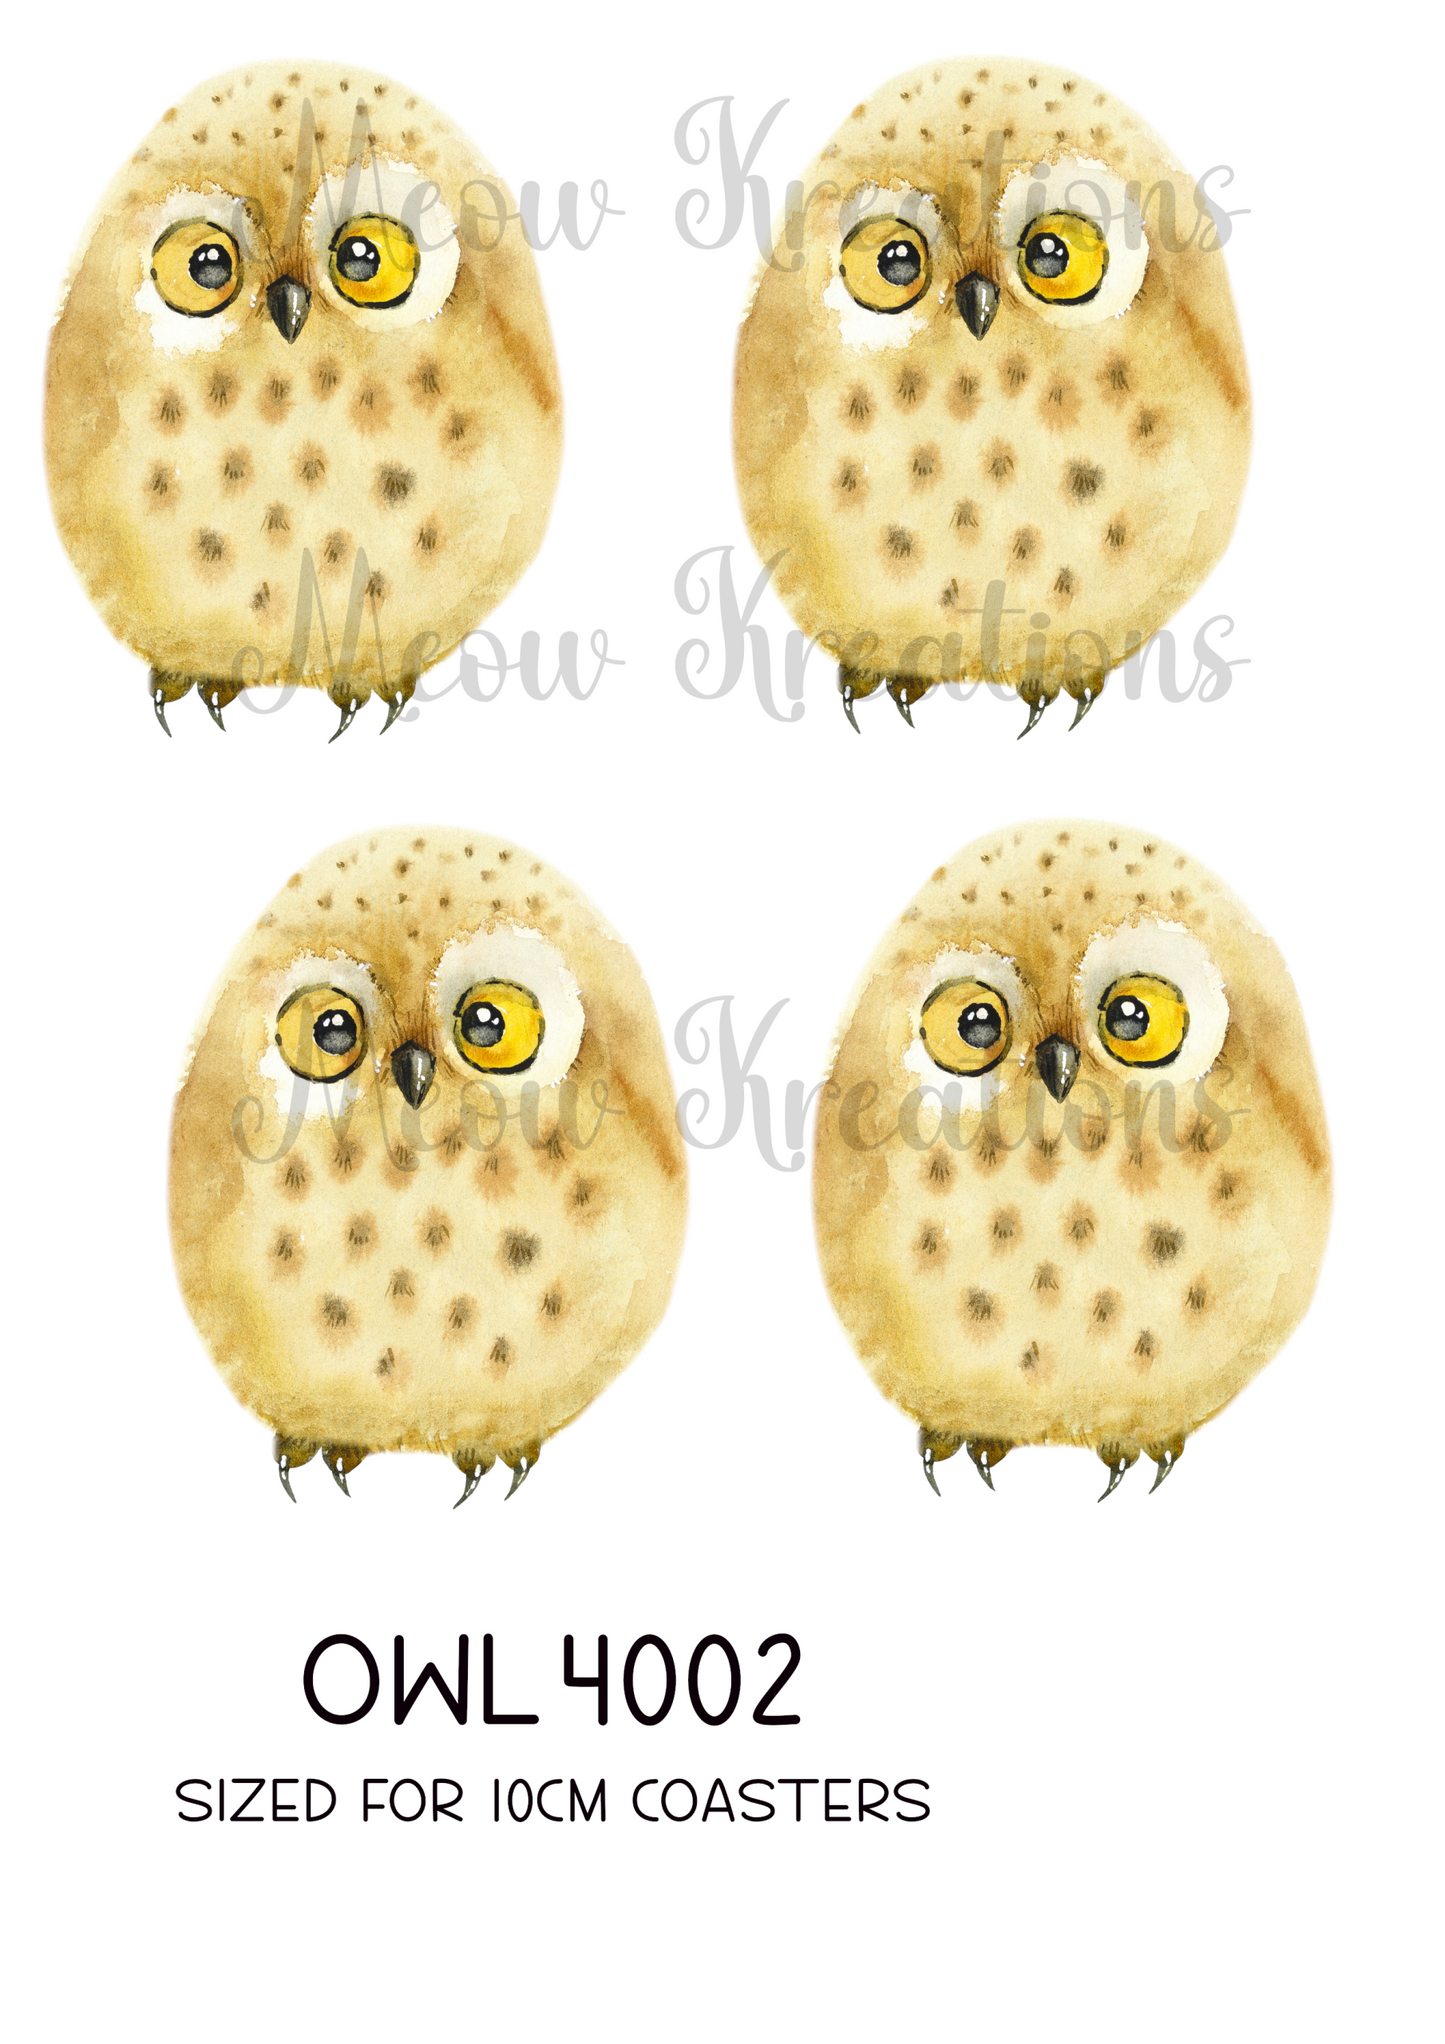 OWL 4002